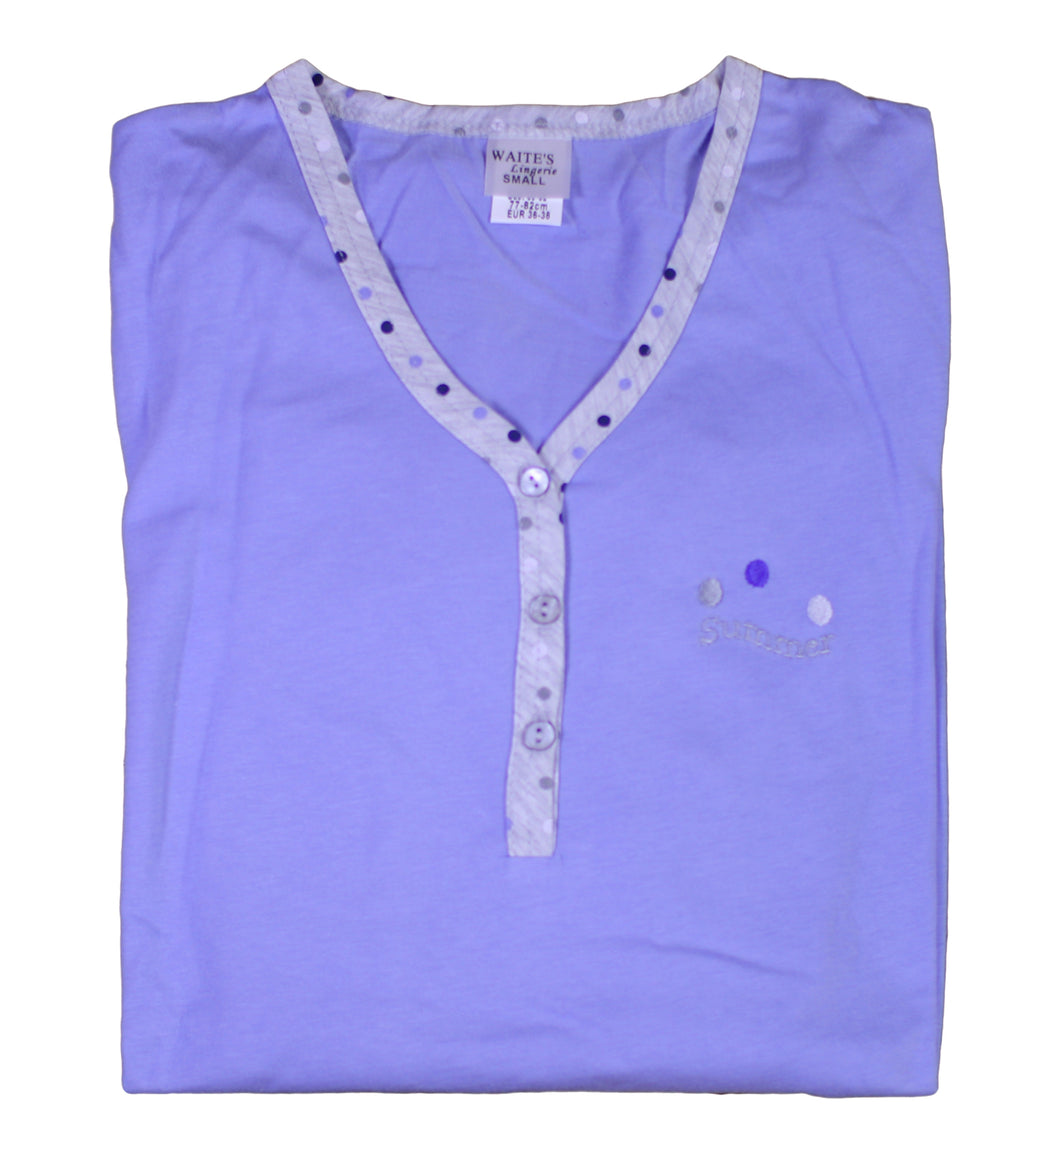 Ladies 100% Cotton 'Summer' Polka Dot Pyjamas S - L (Blue or Pink)